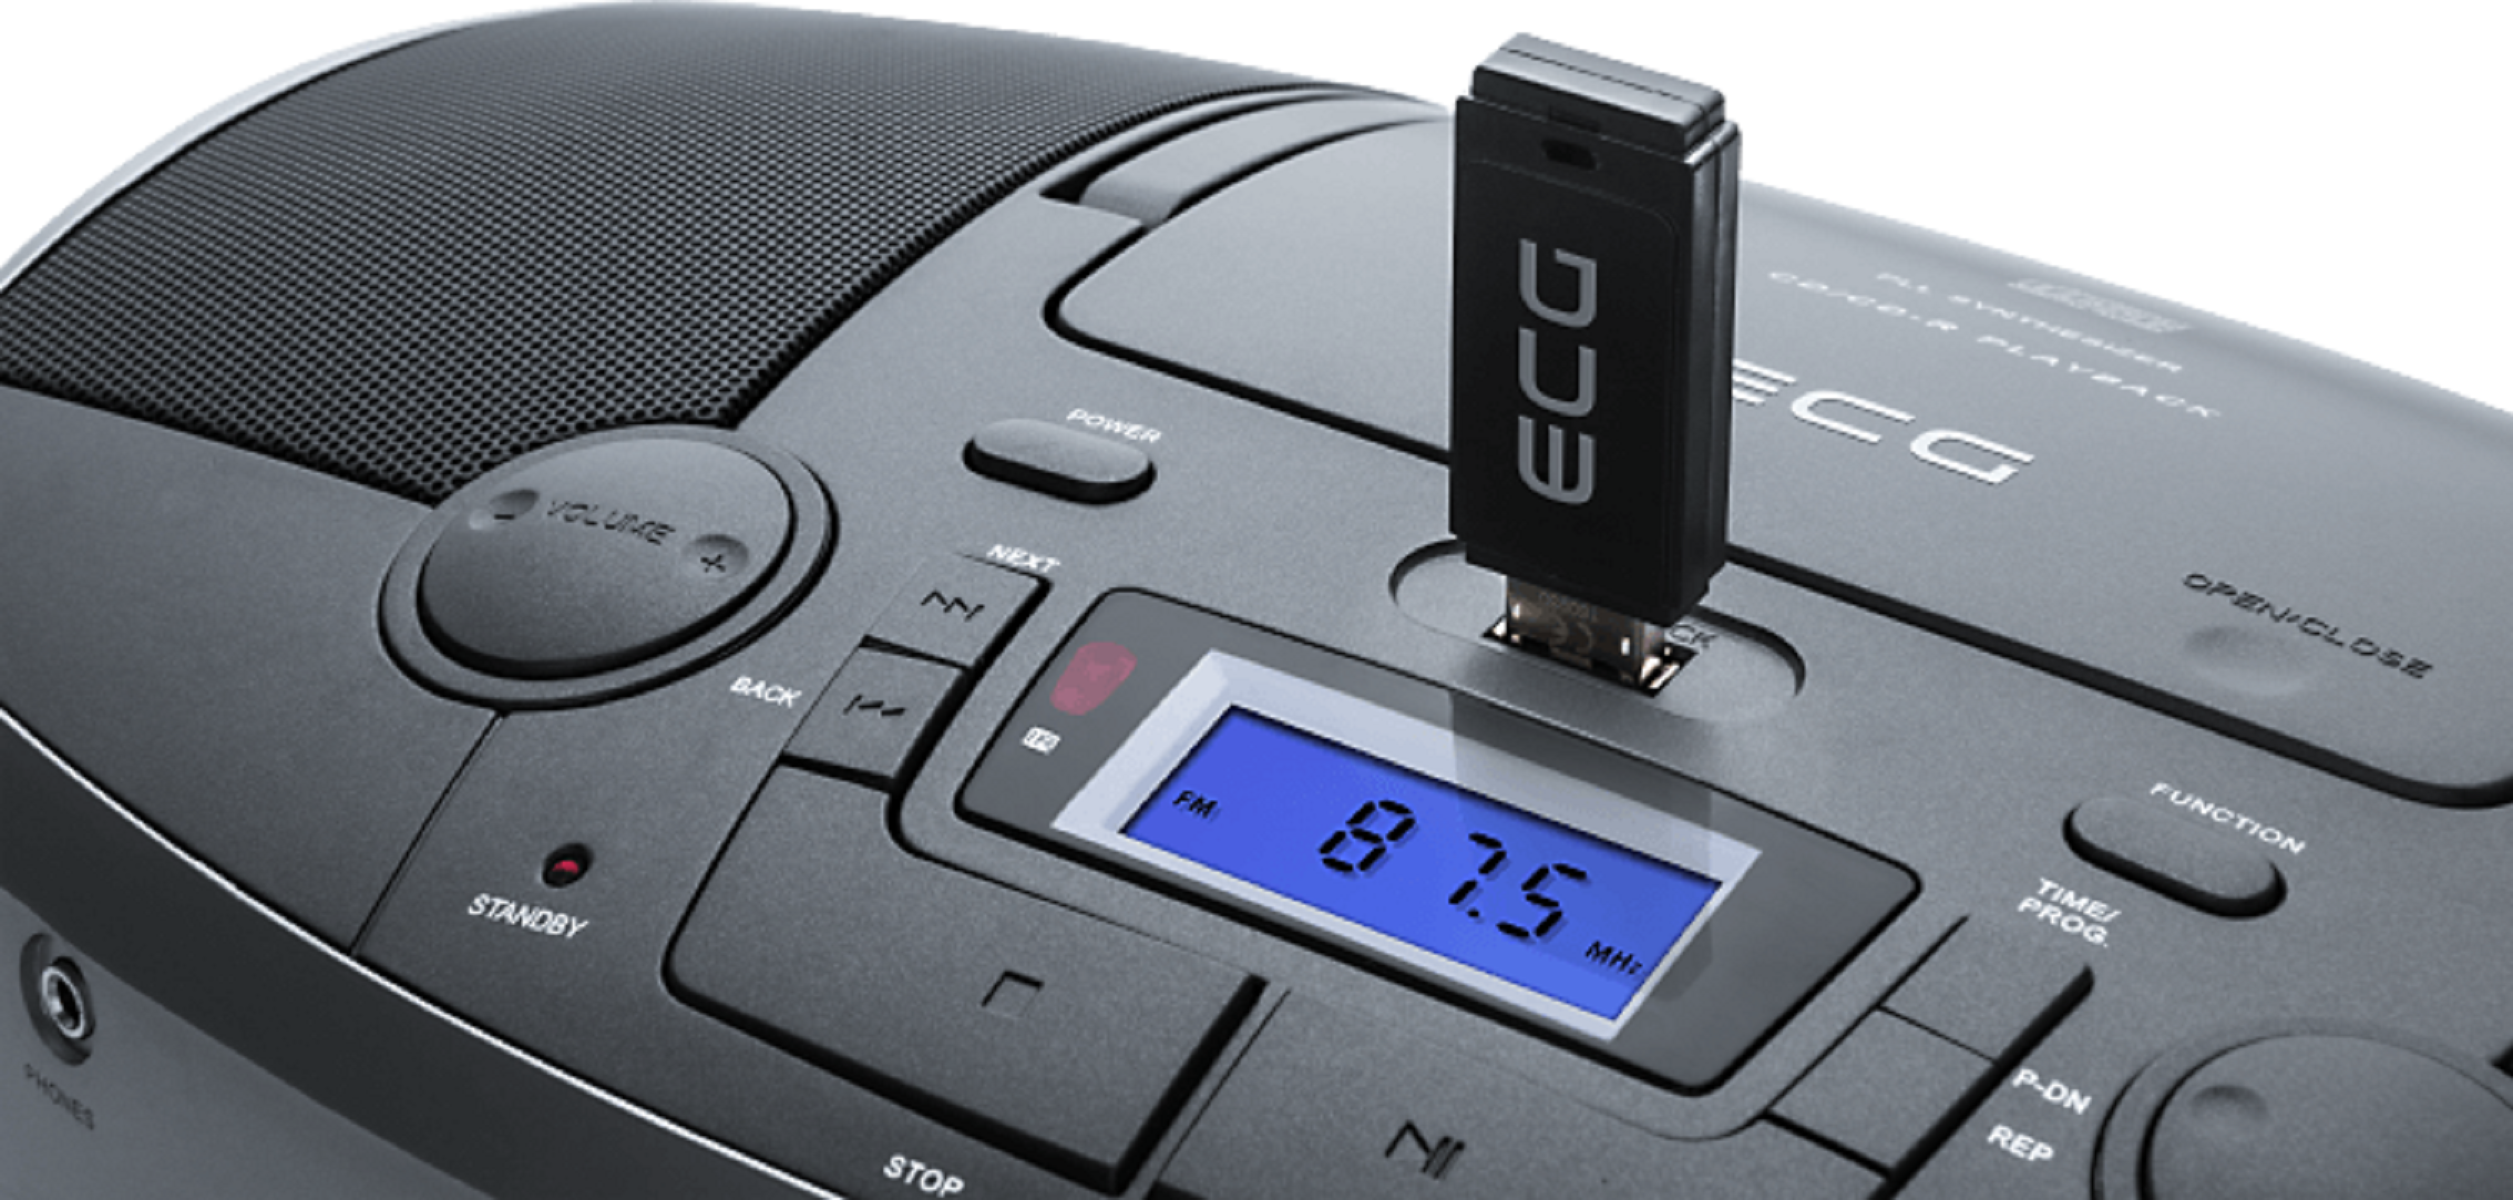 mit | 1000 CDR Titan CD-R/RW, | USB | CD-Radio ECG Radio USB Fernbedienung Titan | U AUX | CD, | CD-Player MP3 mit |